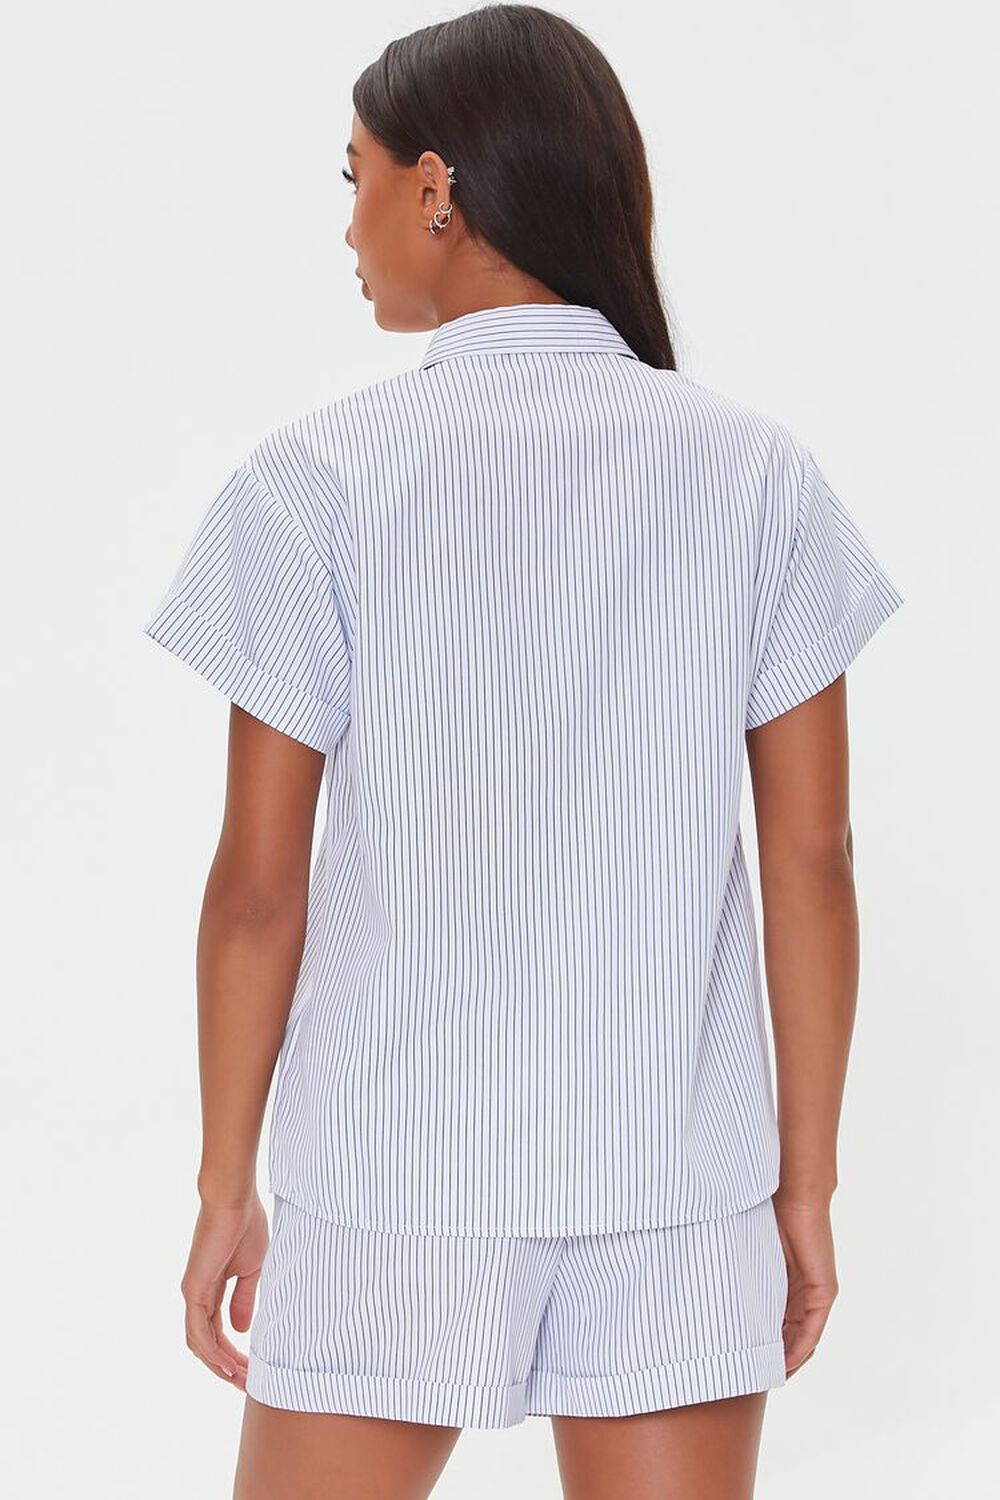 WHITE/NAVY Pinstriped Pajama Shirt & Shorts Set, image 3